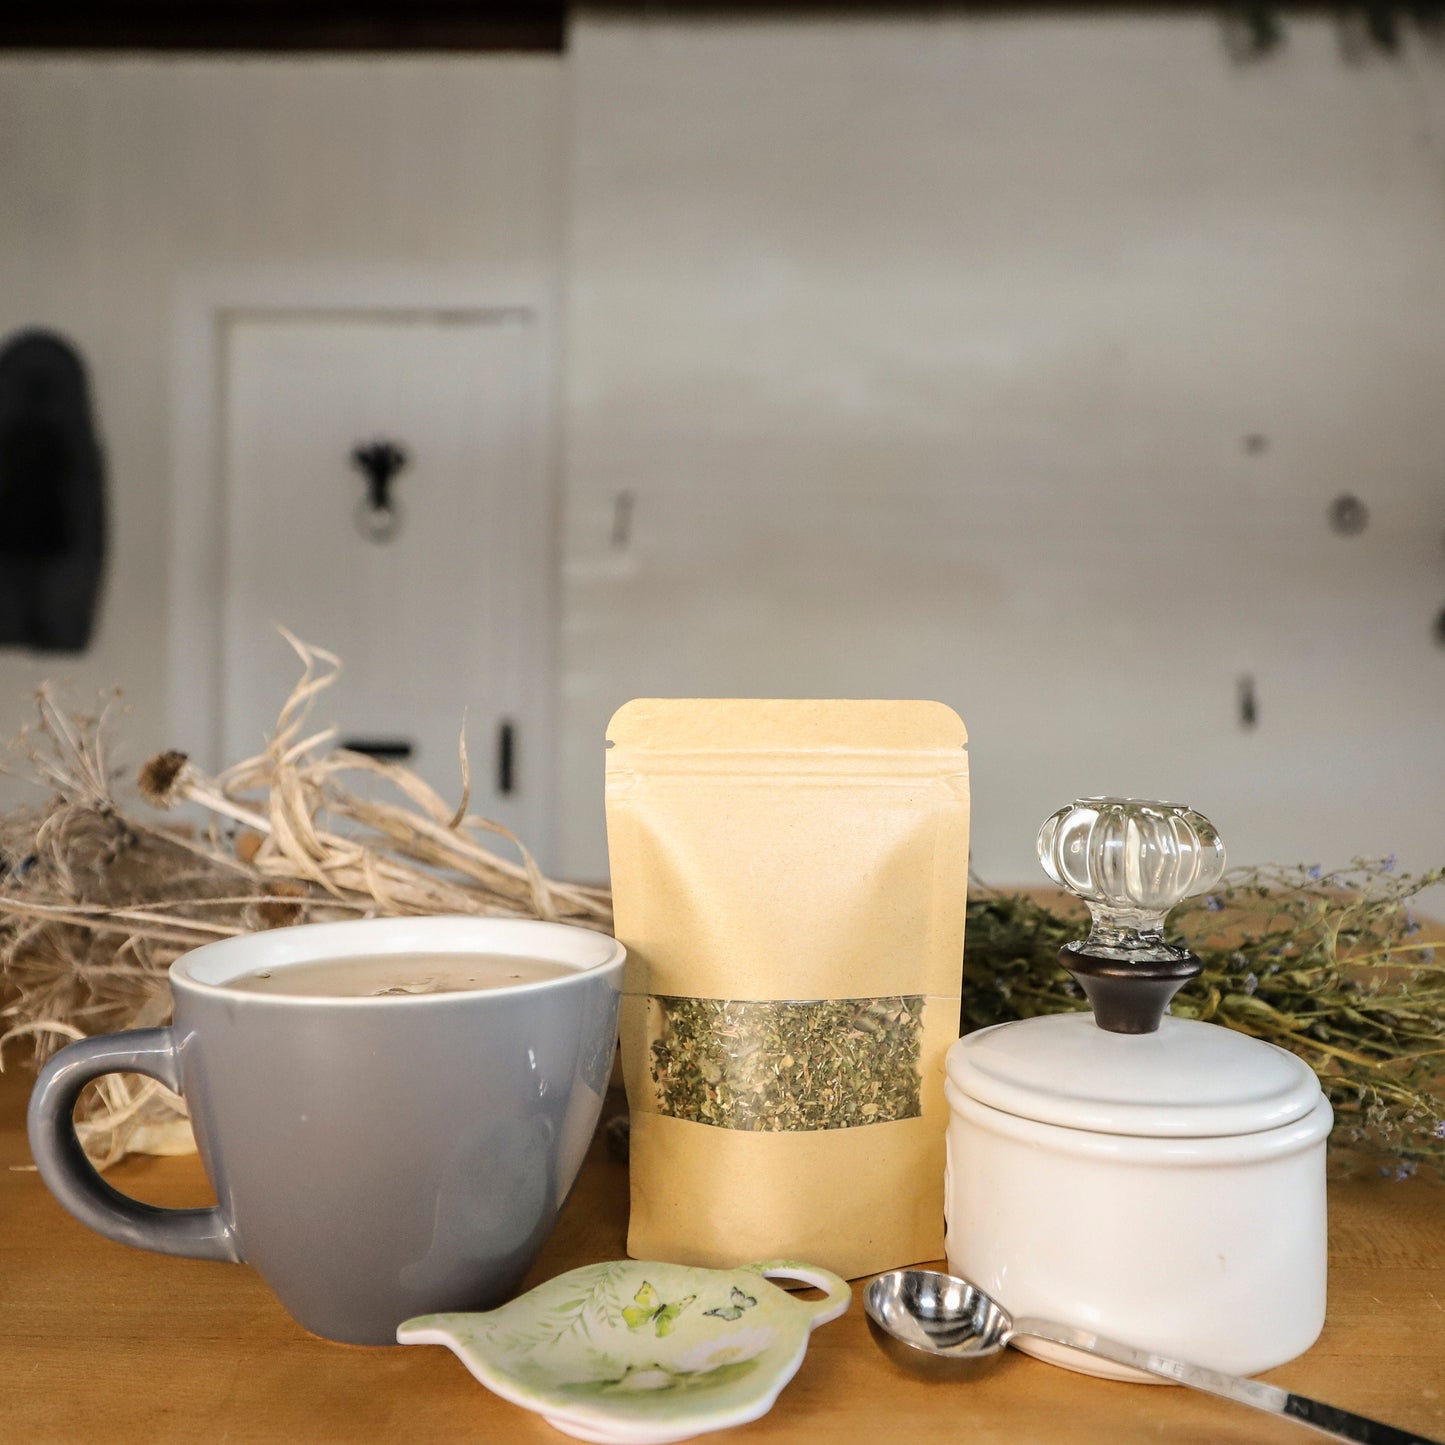 Oneironaut Tea - Organic Tea for Sleeping and Lucid Dreams